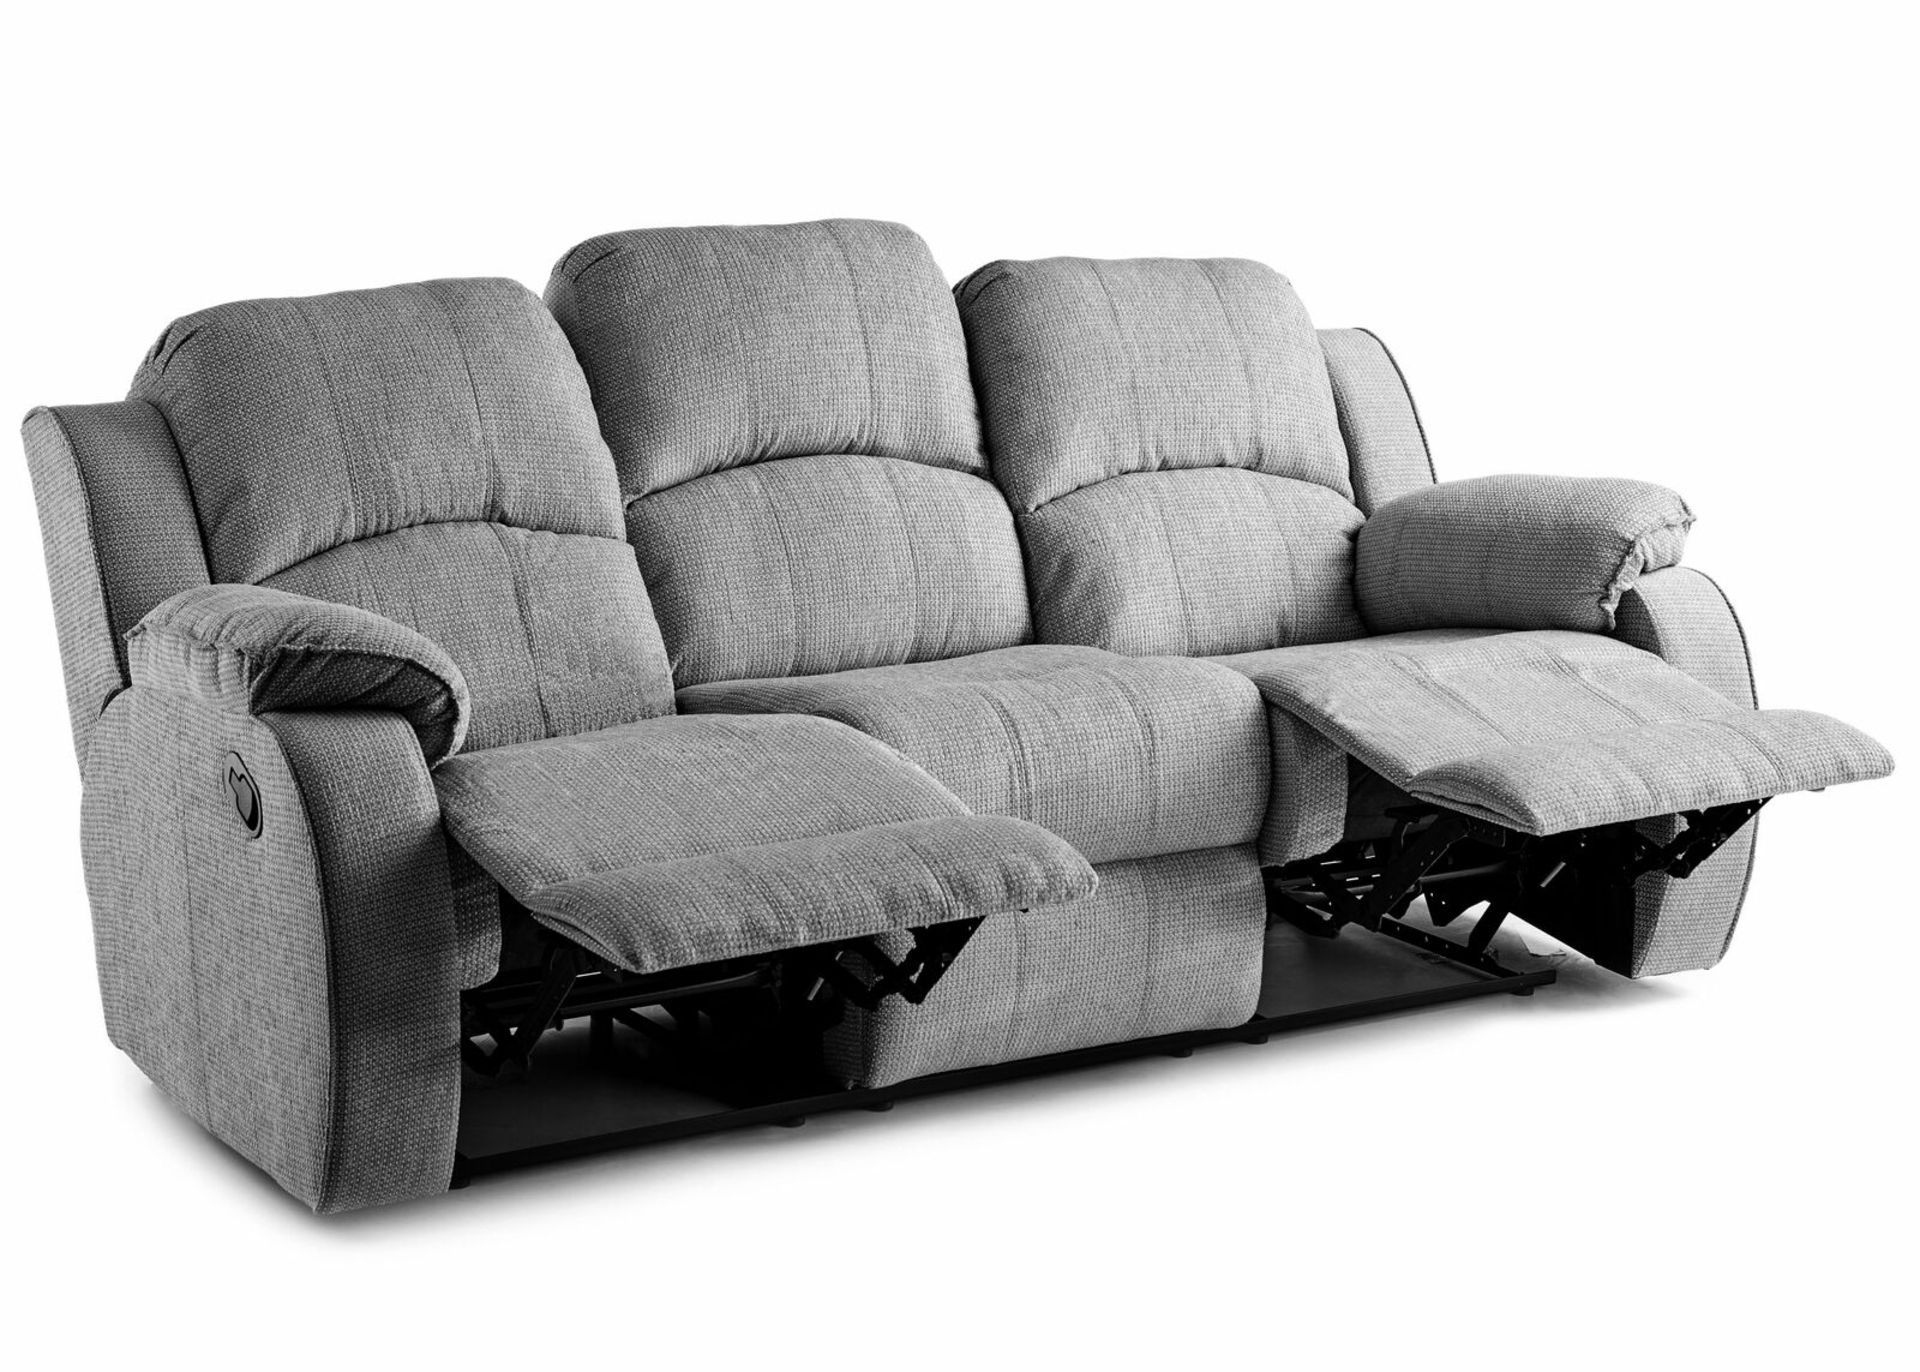 1x Brand New Buckingham 3 Seater Sofa in Graphite Tweed - Image 2 of 2